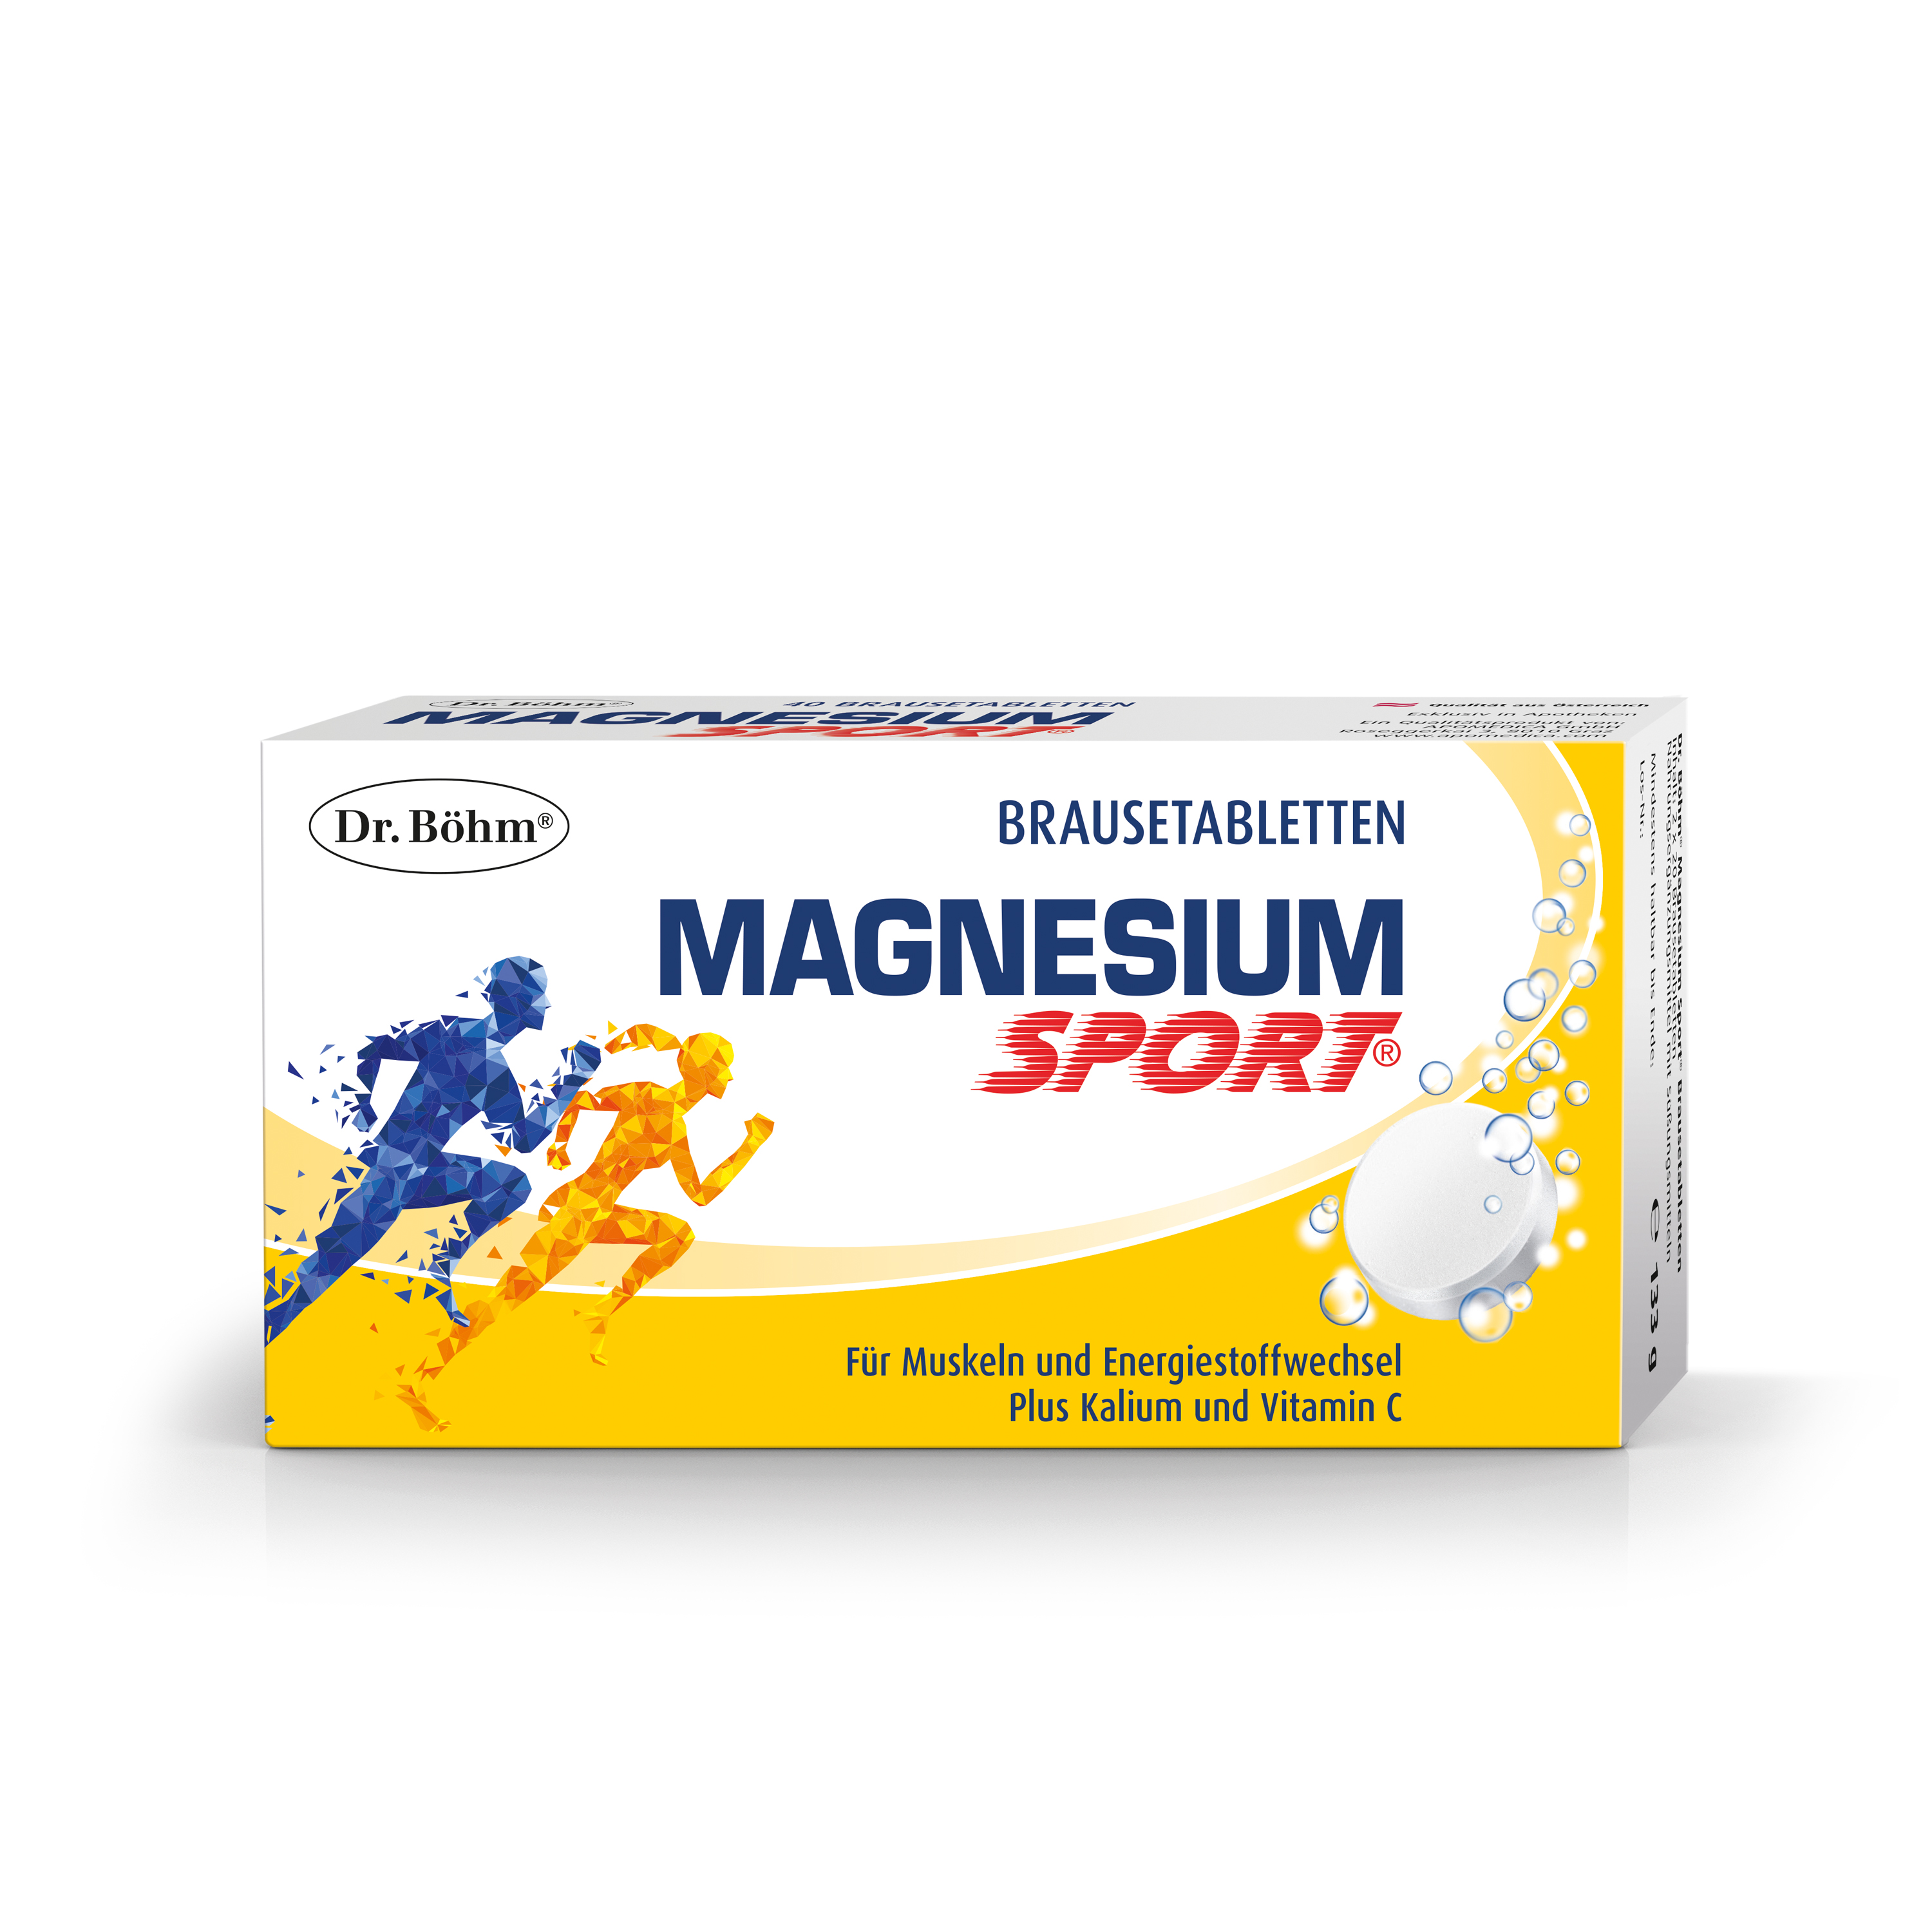 Magnesium Brausetabletten - Packung Dr. Böhm®